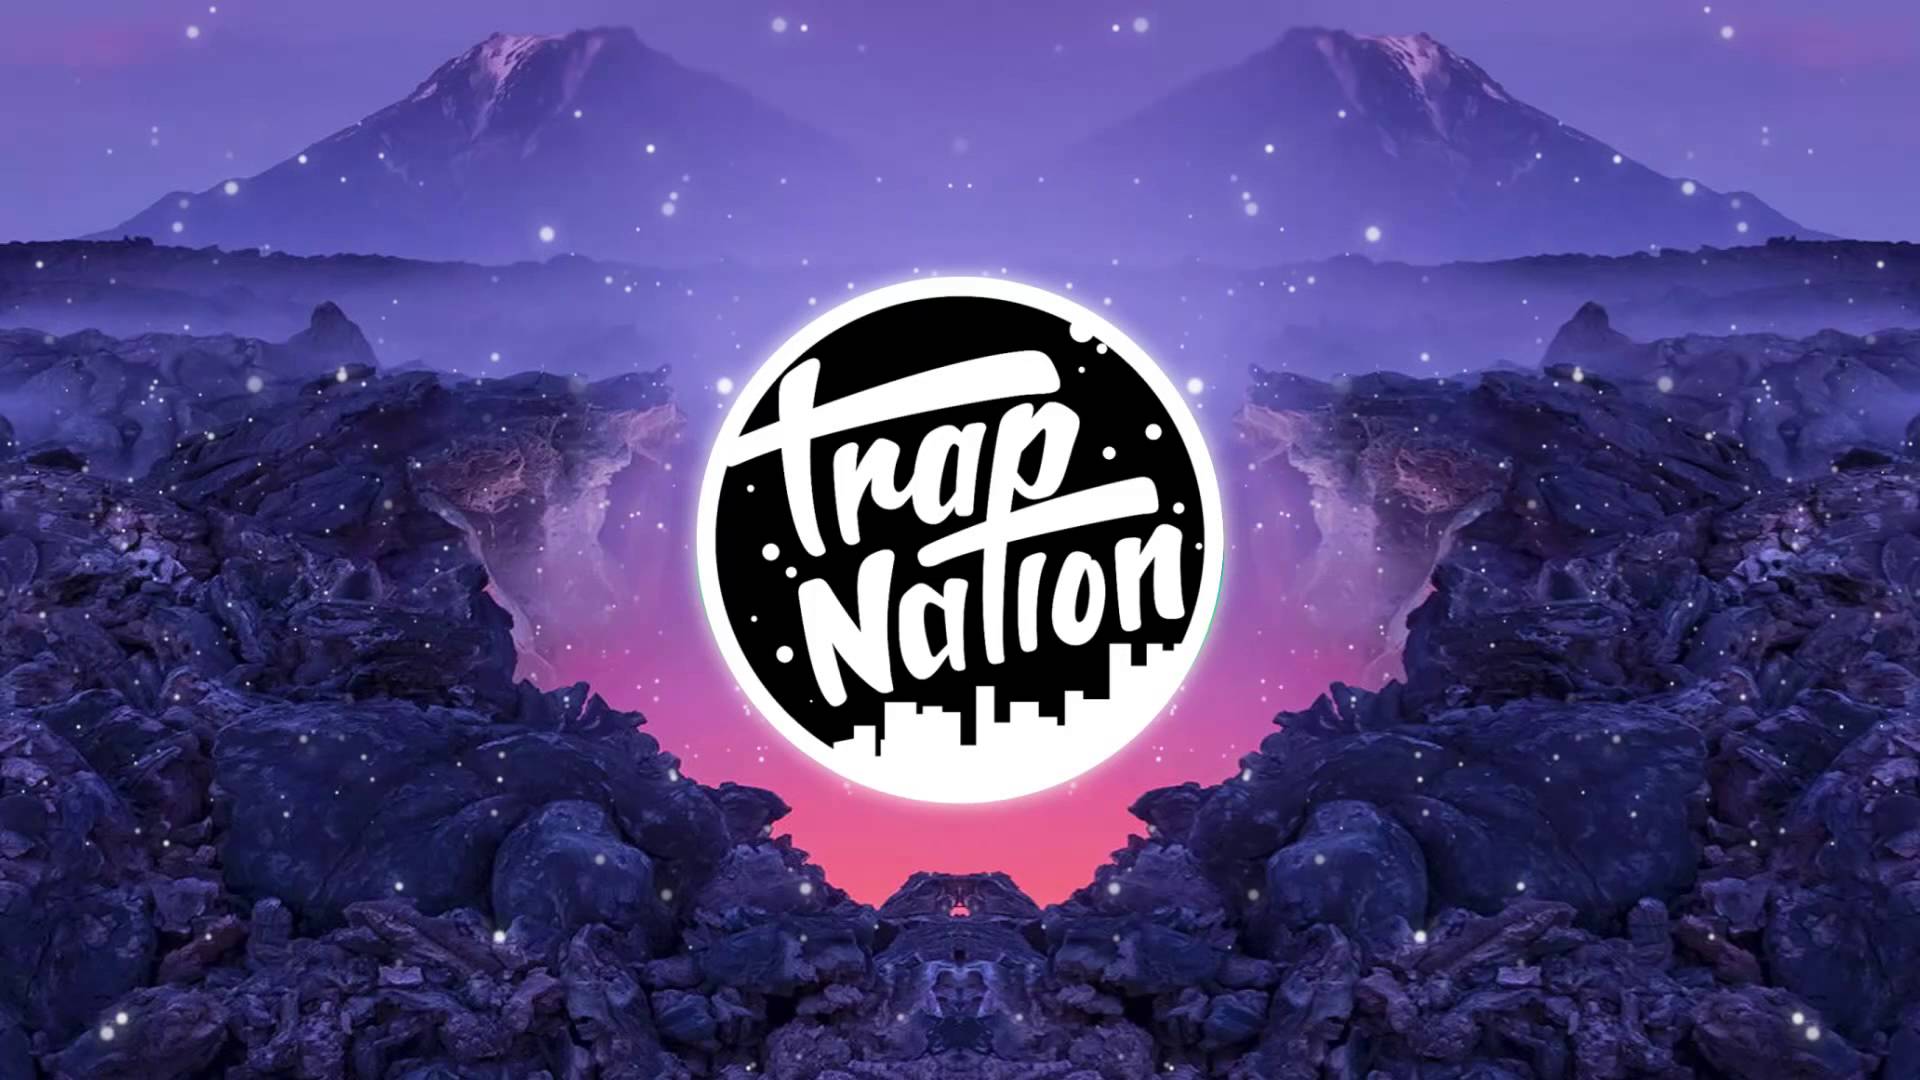 trap nation wallpaper,purple,mountainous landforms,font,logo,violet